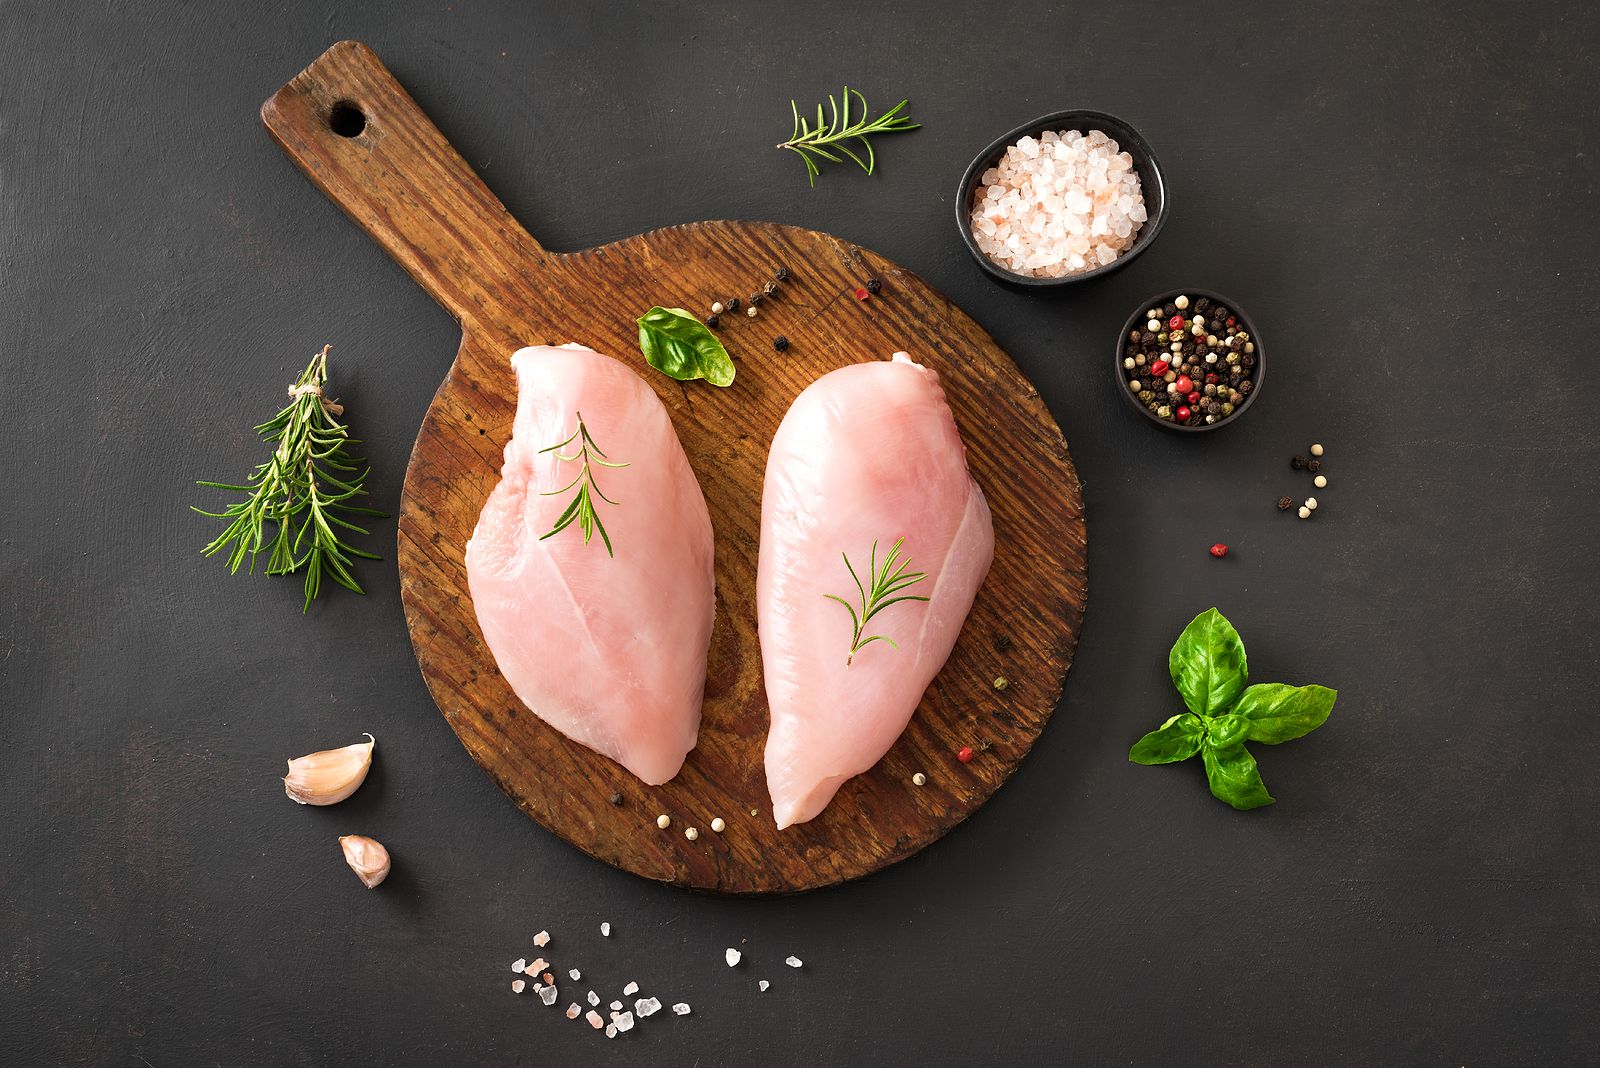 Beneficios de comer pollo que te encantará saber: ¿Sabías que contiene triptófano?